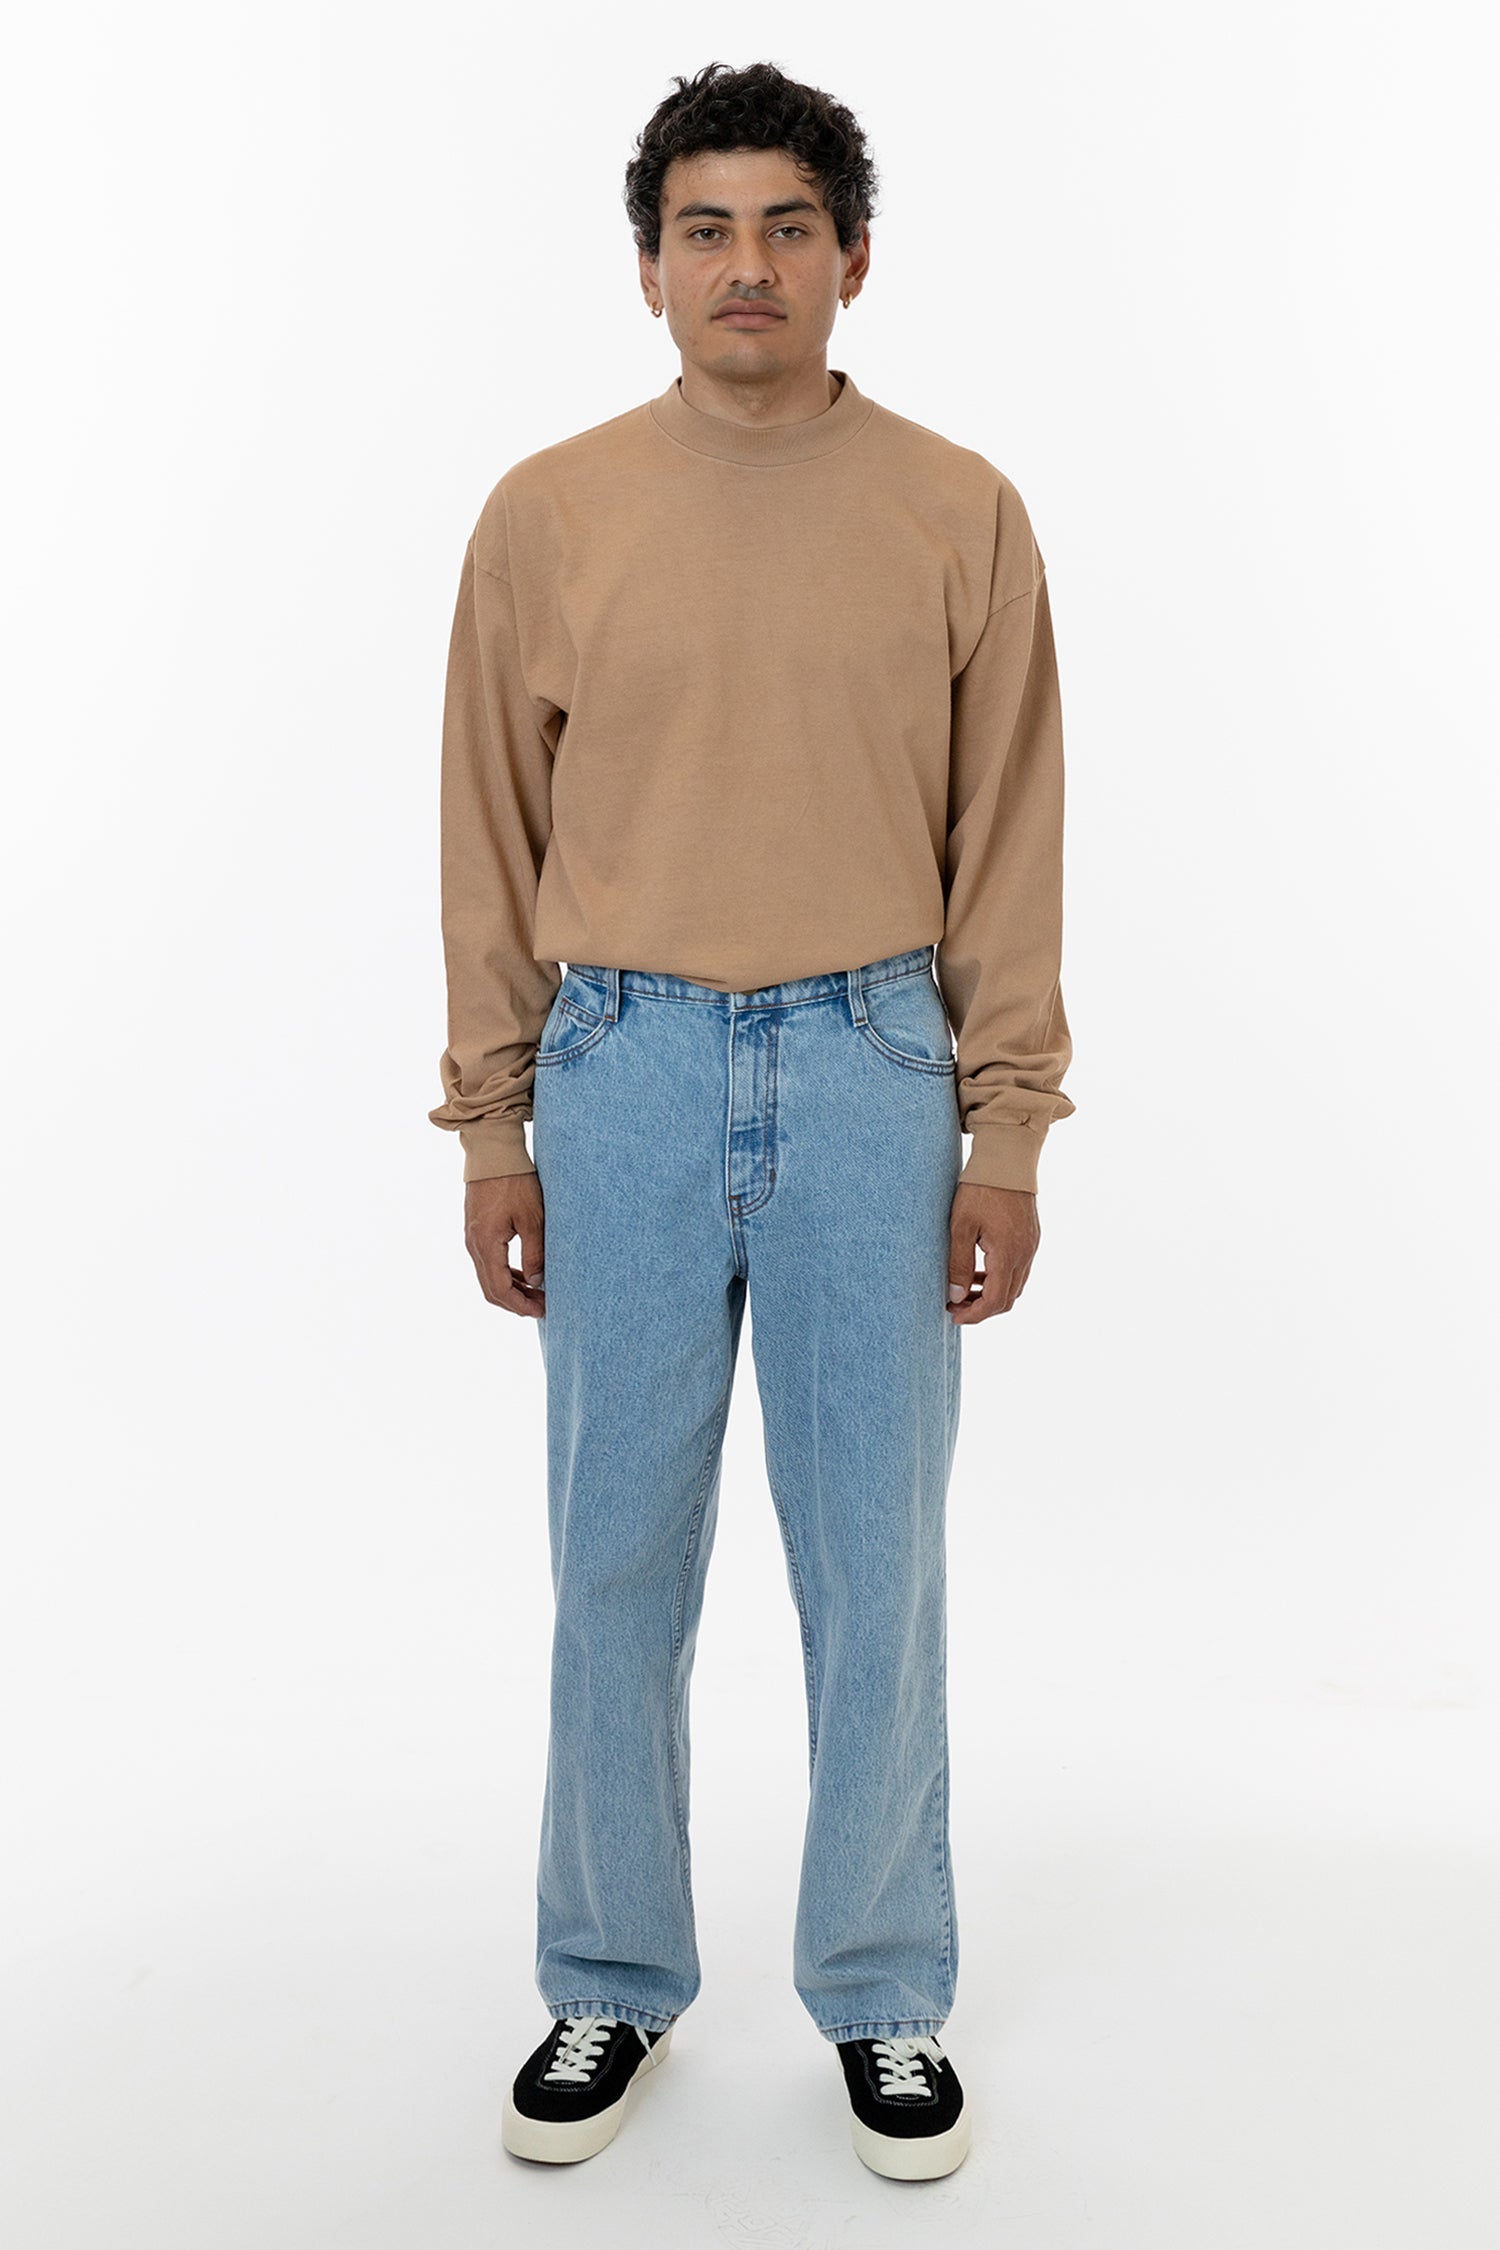 RDNM410 - Men's Loose Fit Jeans Los Angeles Apparel